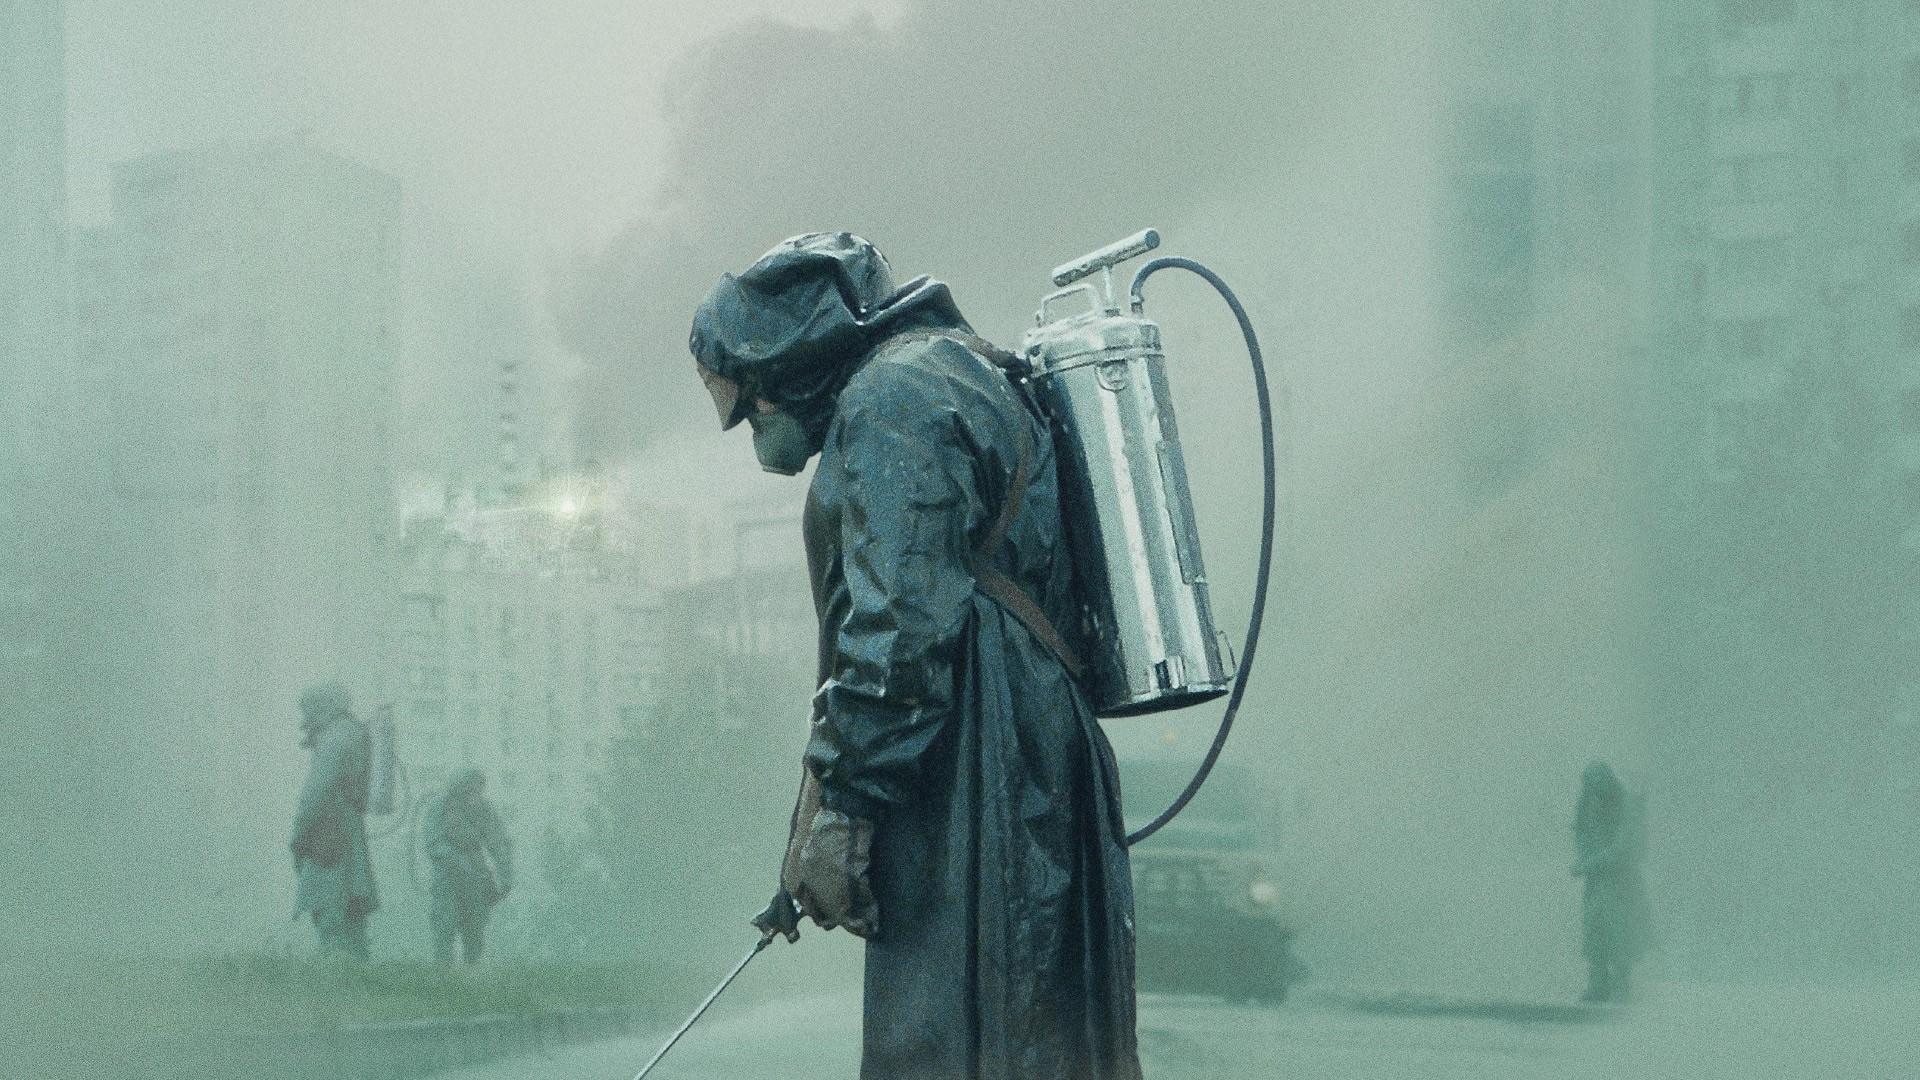 https://www.zerottounonews.it/wp-content/uploads/2019/07/23451-chernobyl-b-streaming.jpg